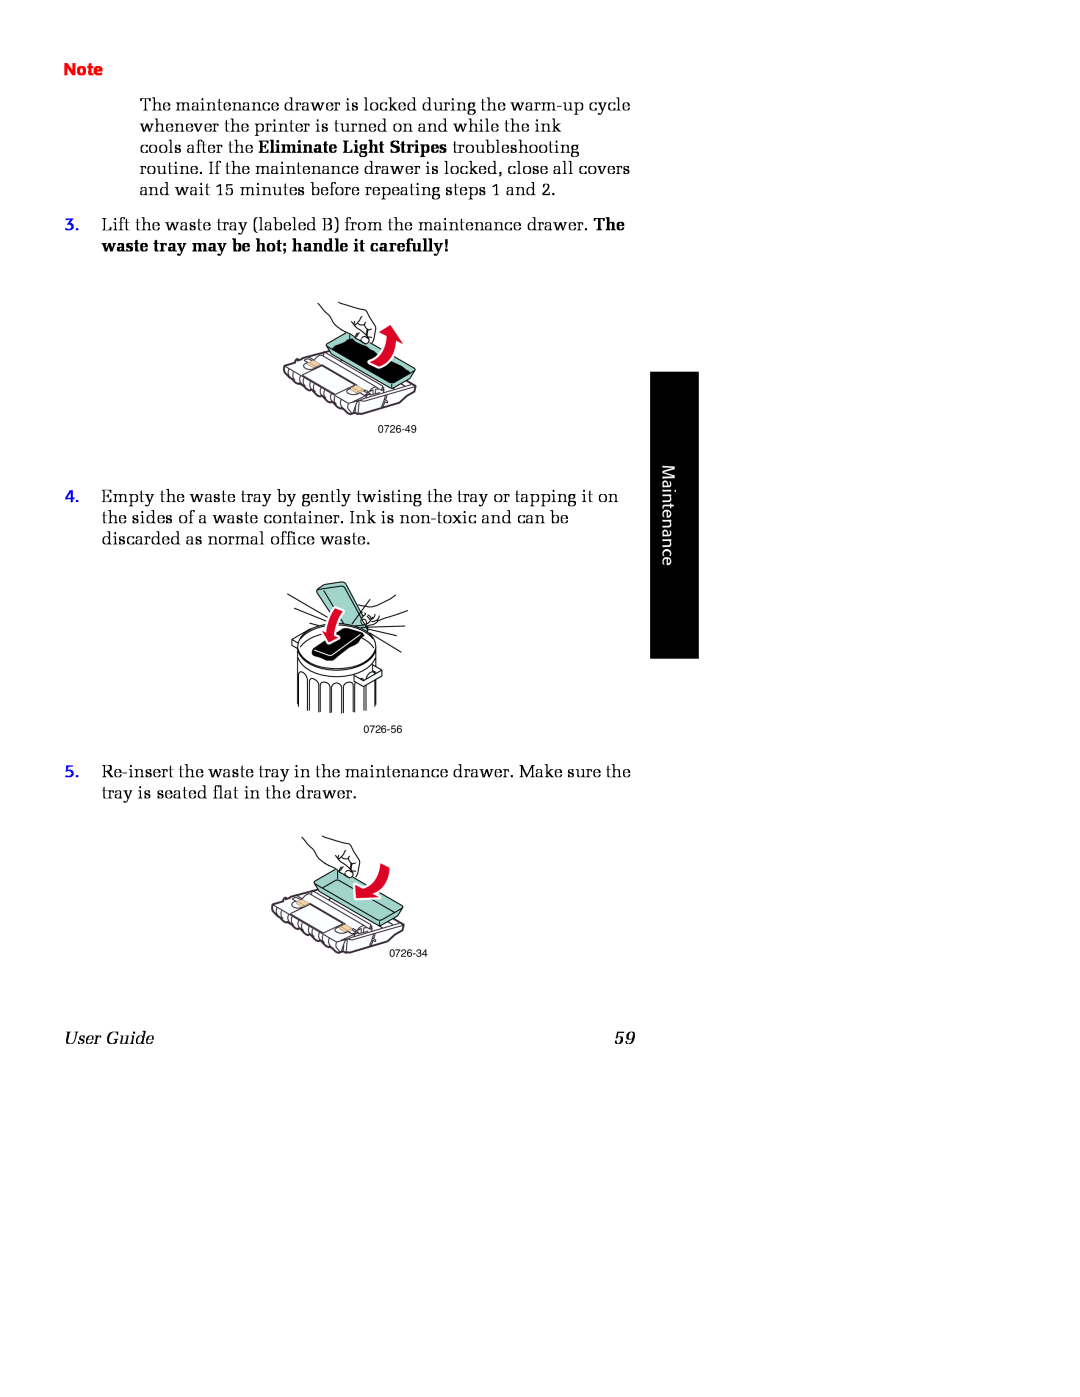 Xerox Phaser 860 manual Maintenance, User Guide 